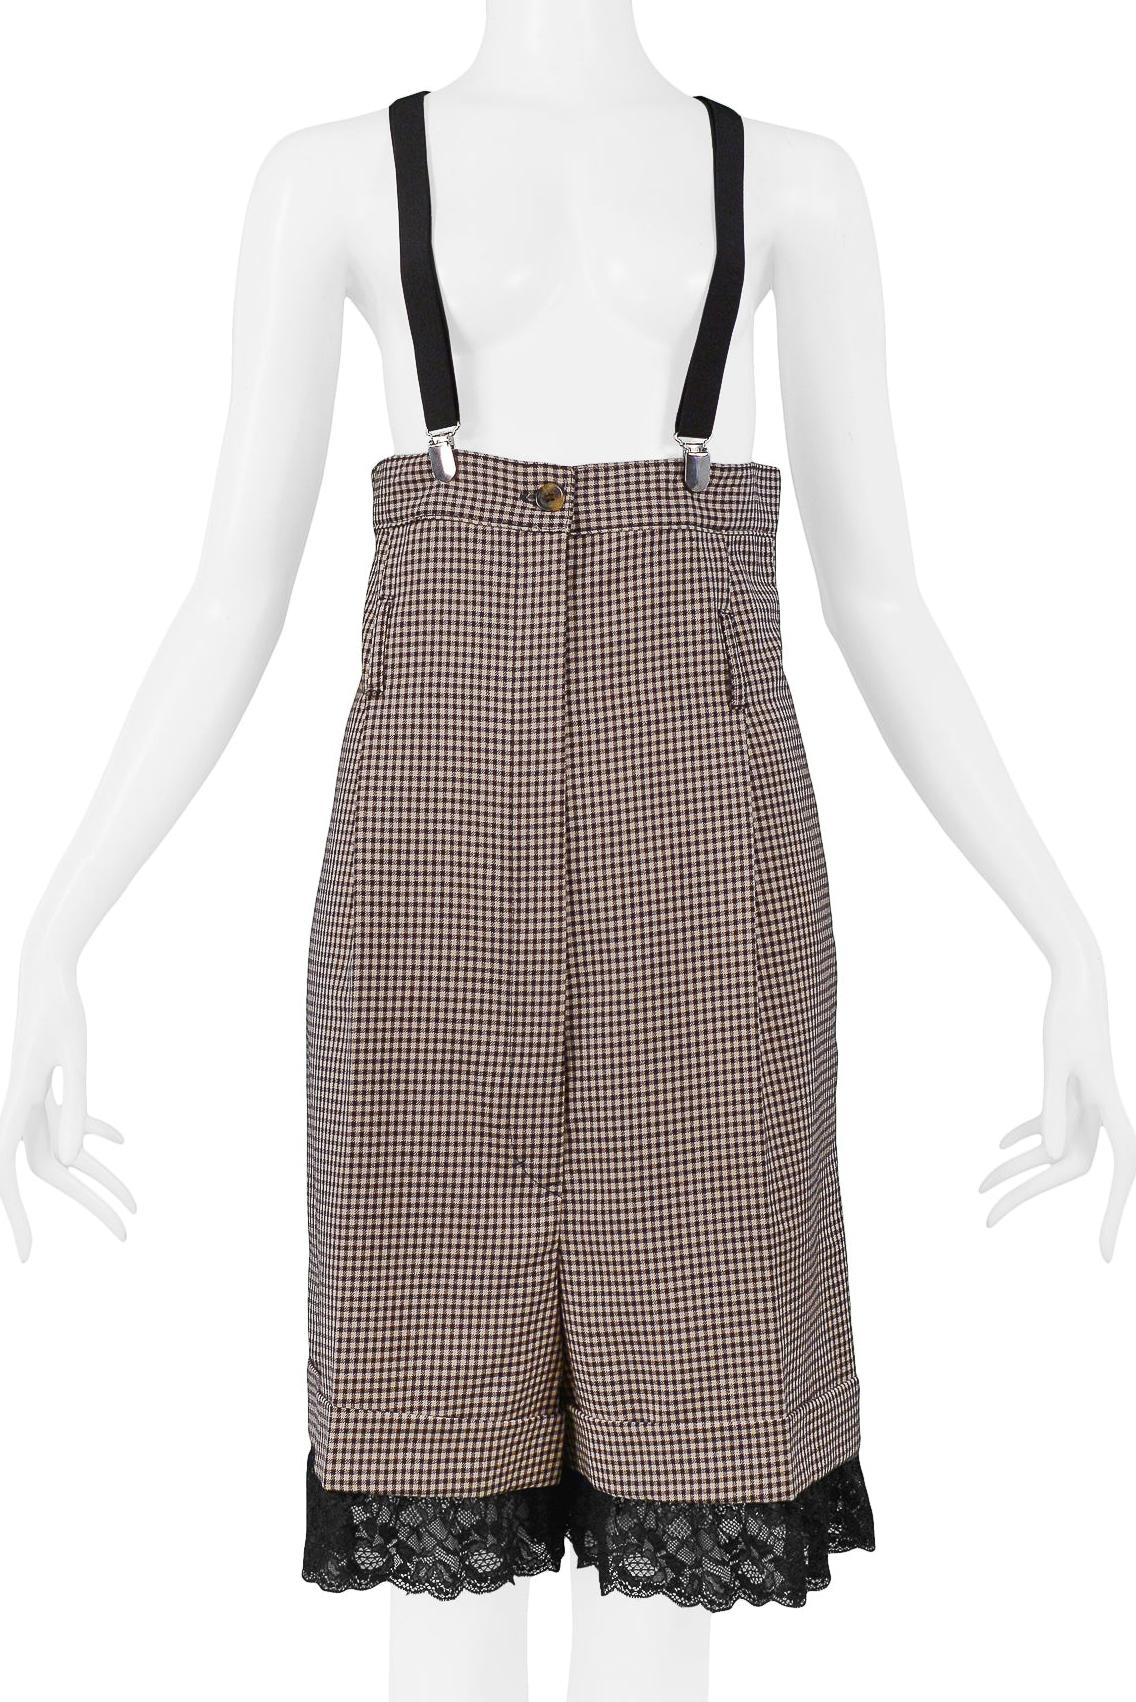 Jean Paul Gaultier Brown Check High Waisted Suspender Shorts (Grau) im Angebot